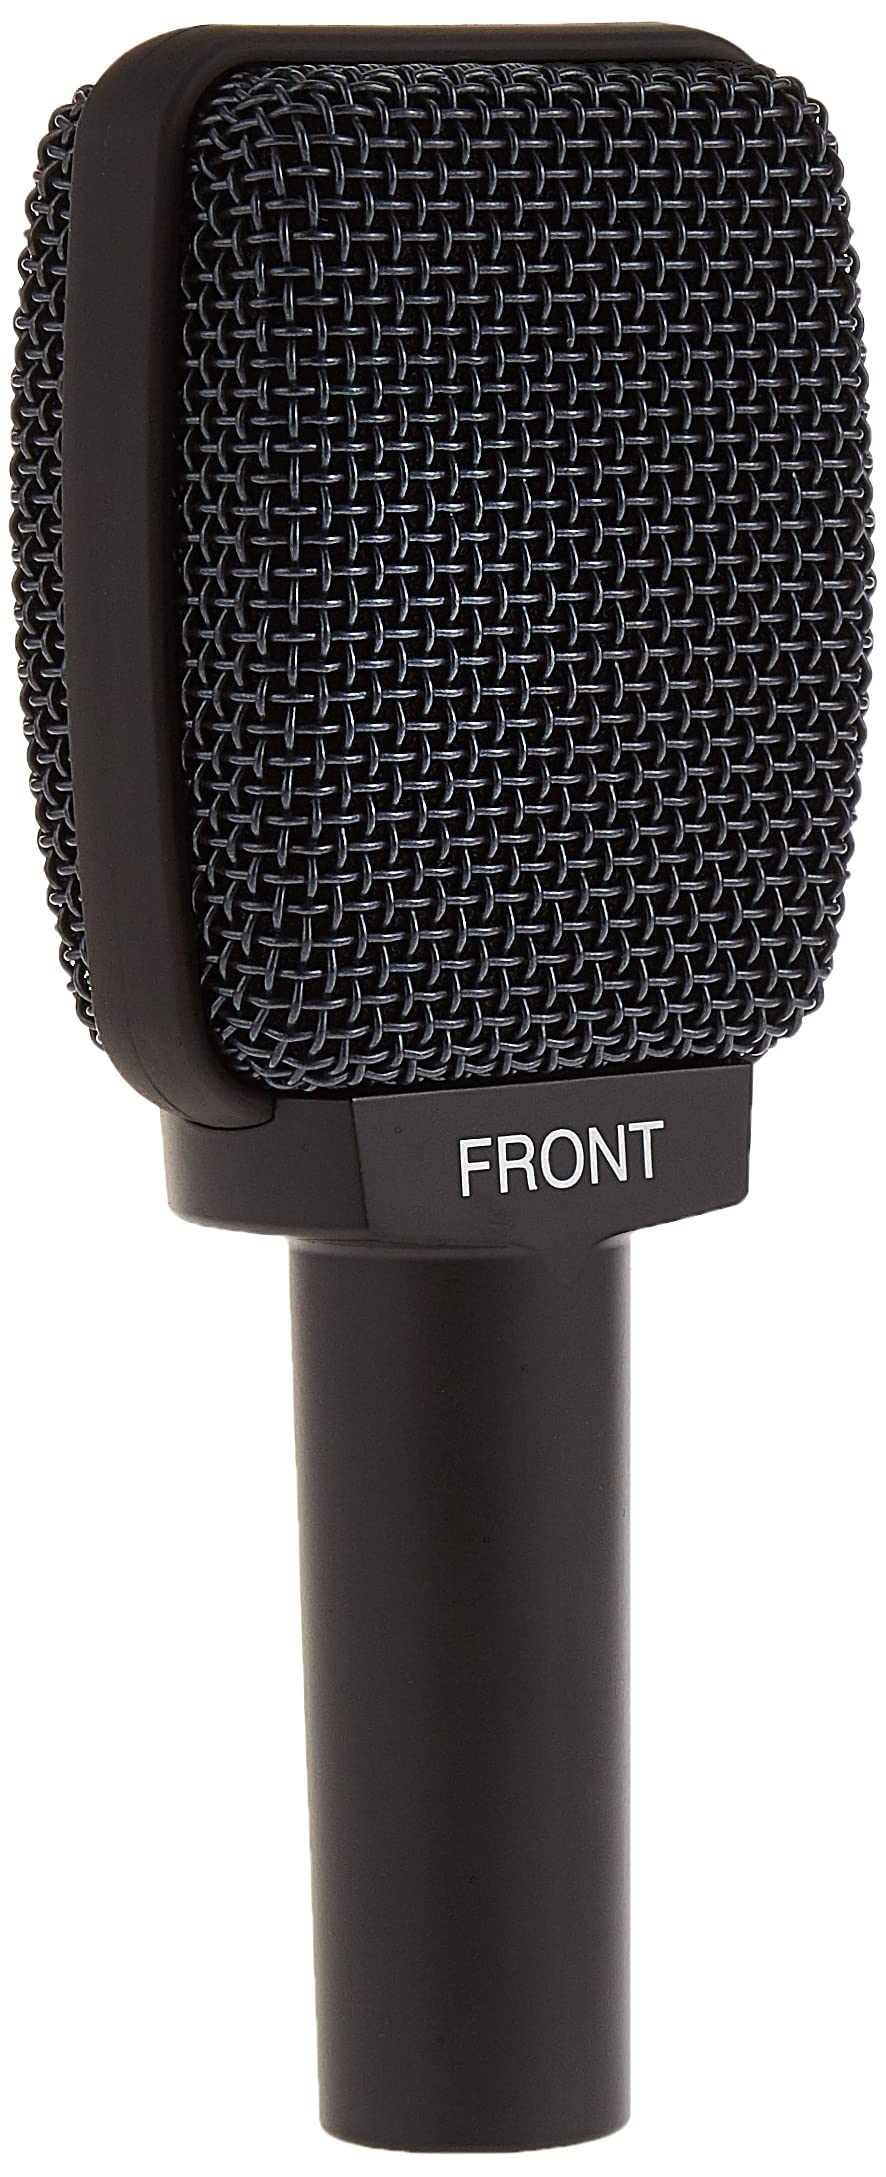 Sennheiser Pro Audio E906 Microphone, black